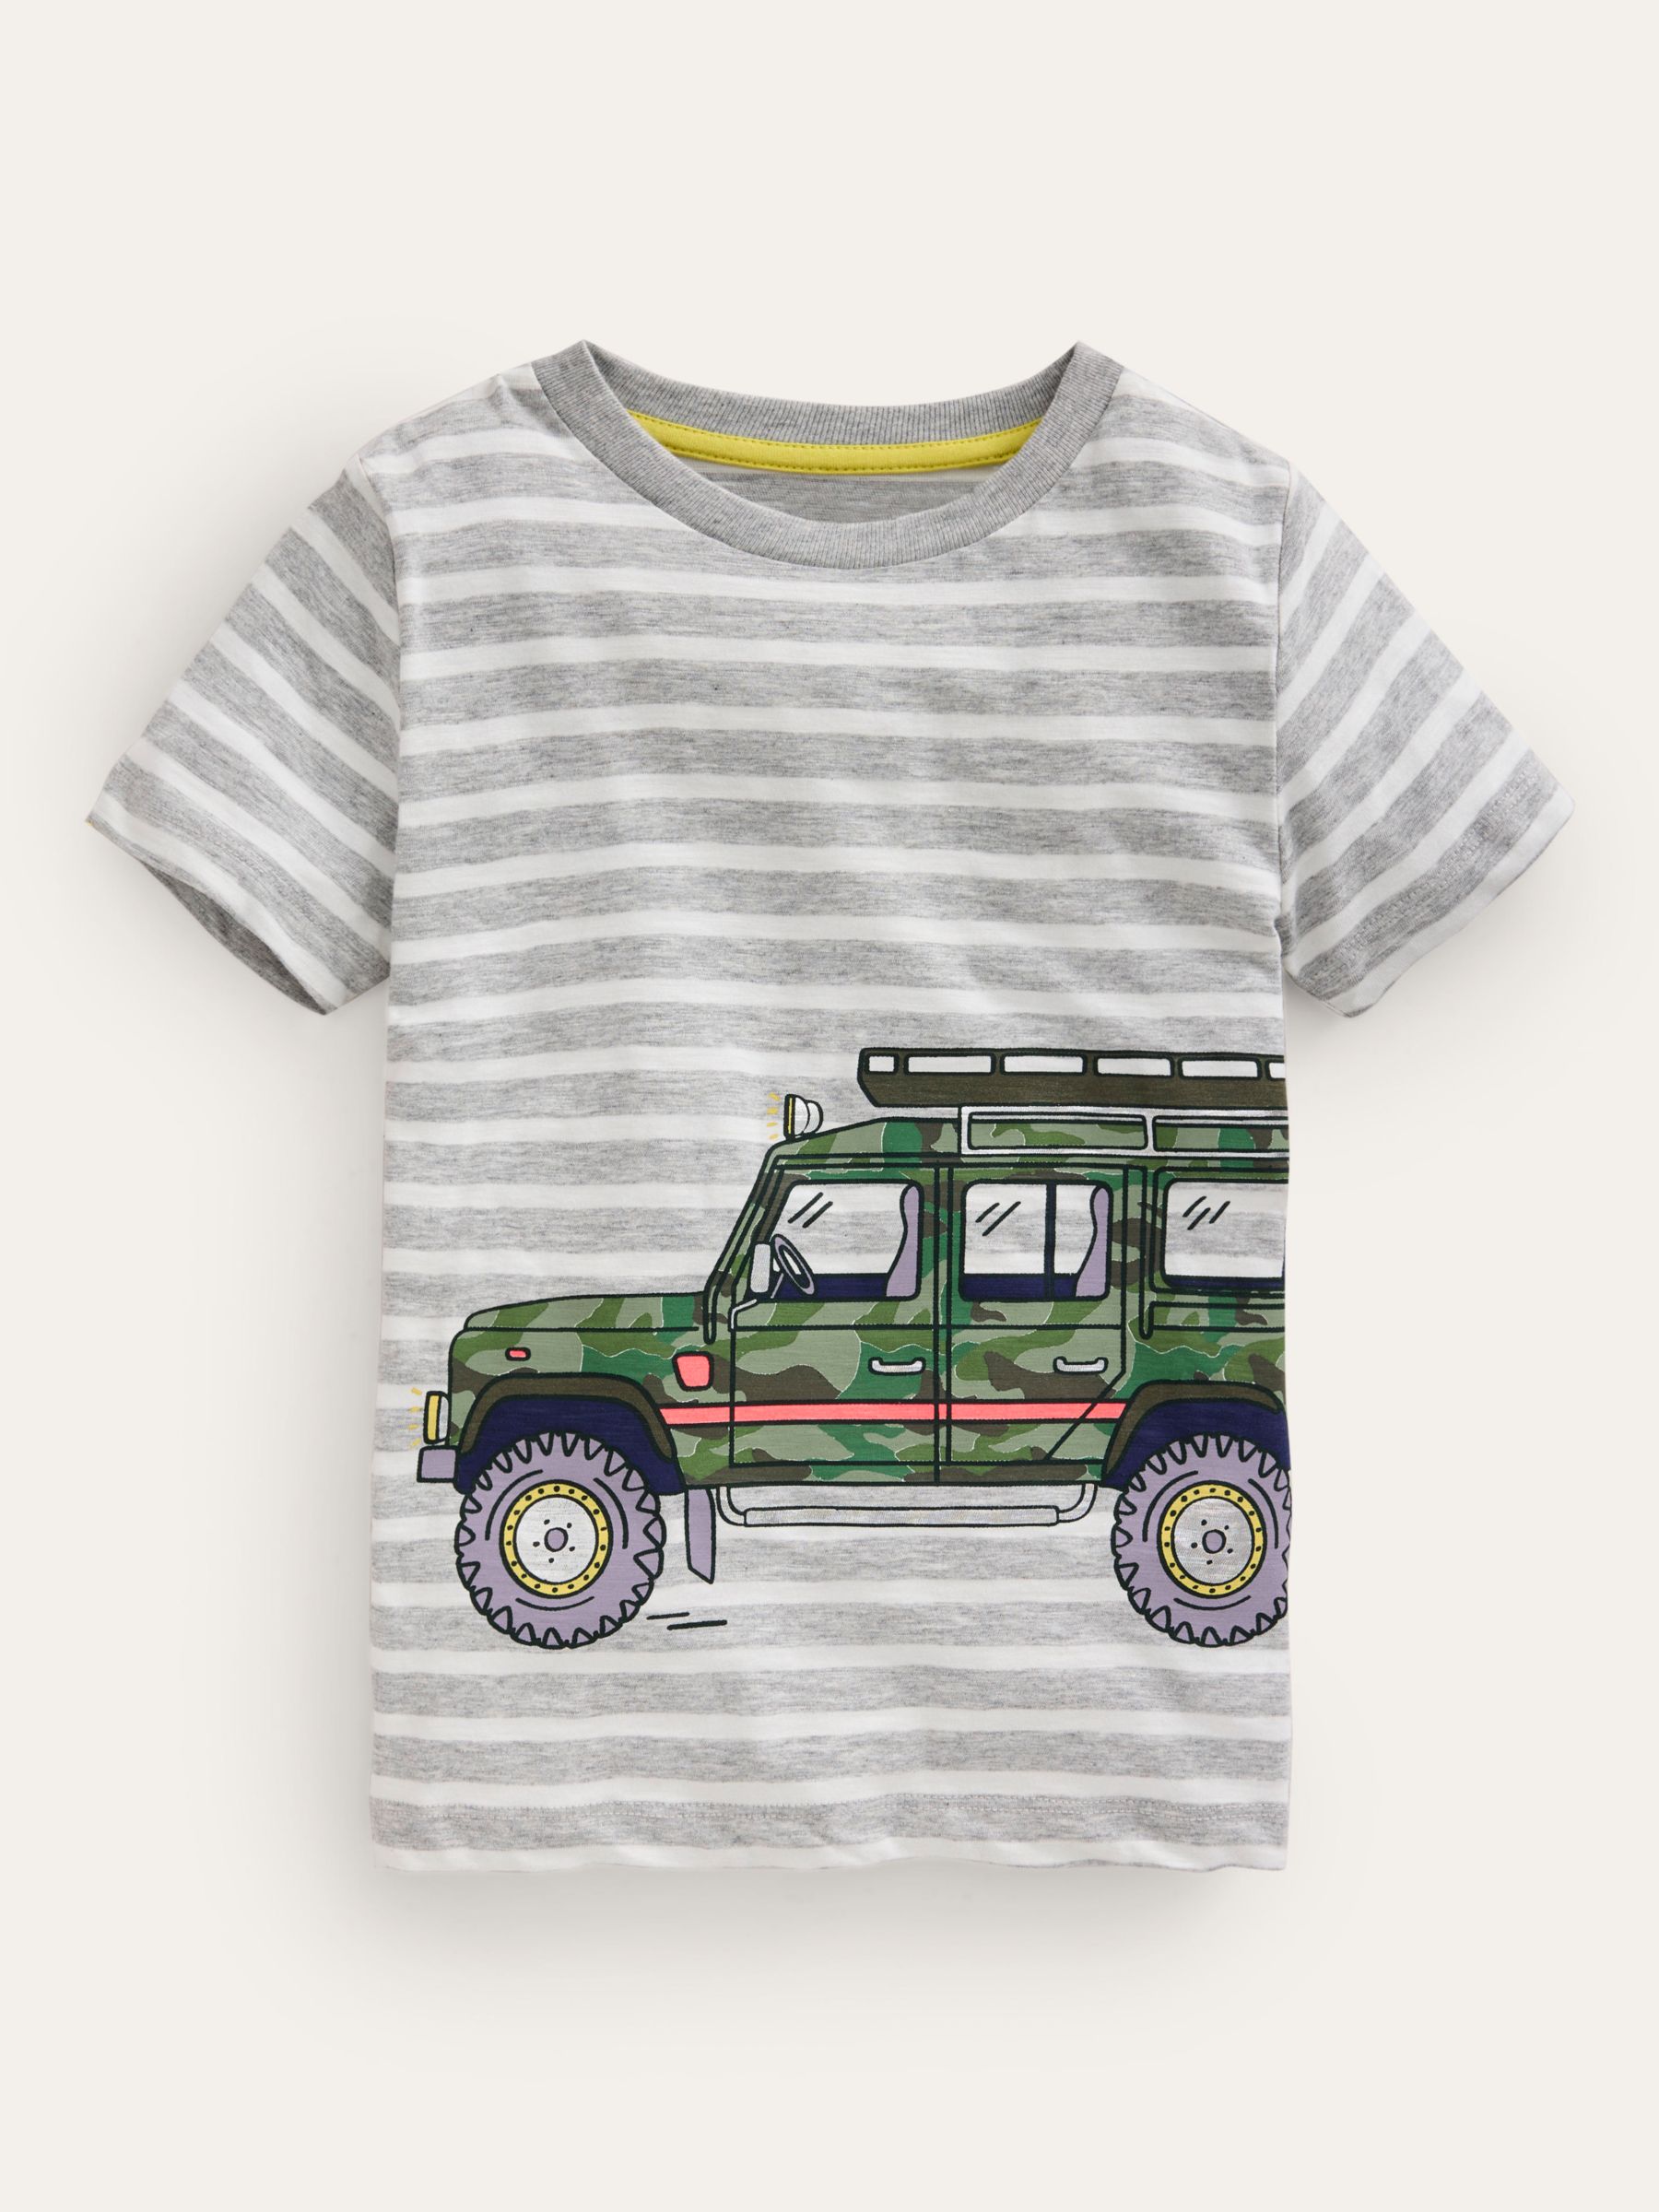 Mini Boden Kids' Stripe Foil Print Range Rover T-Shirt, Grey/Ivory, 6-7 years